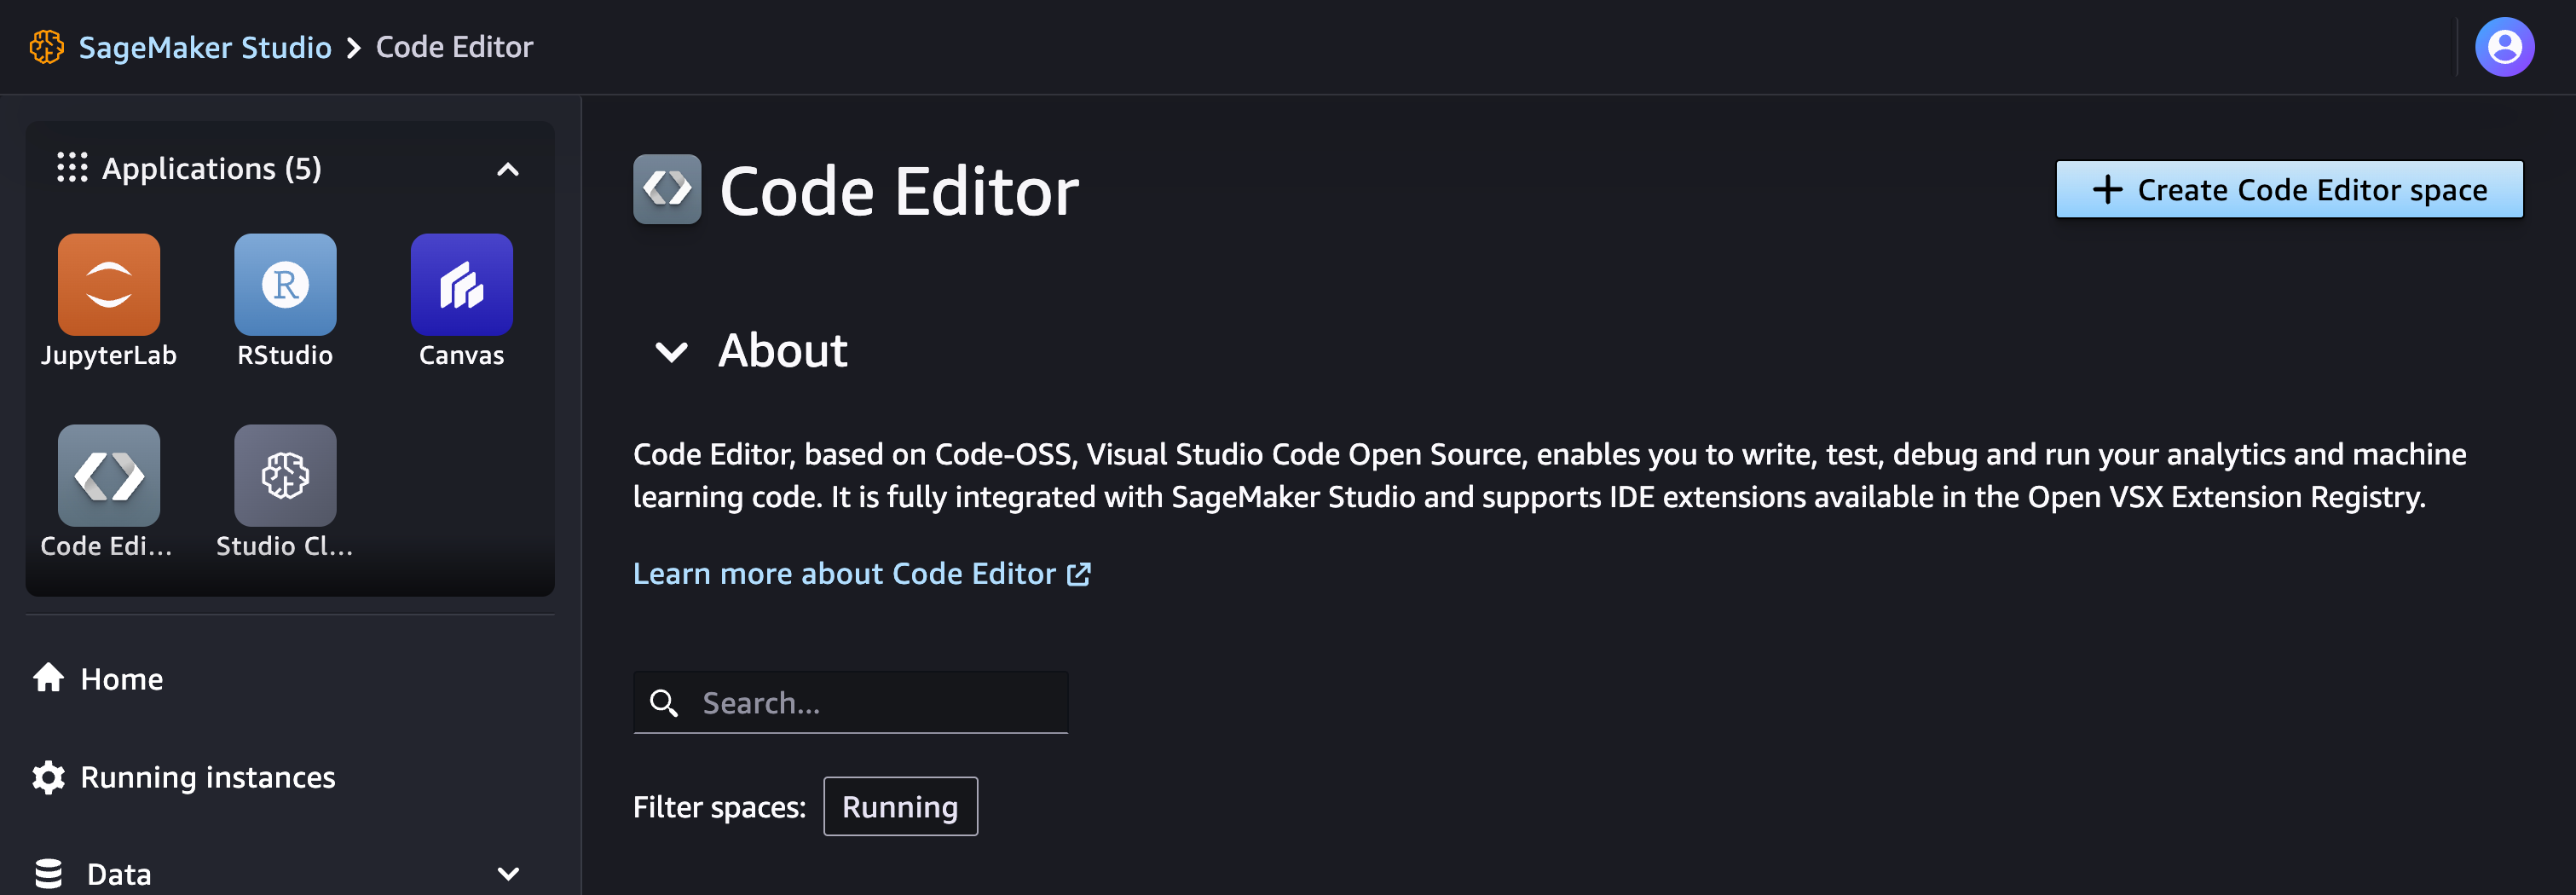 Create a Code Editor Space